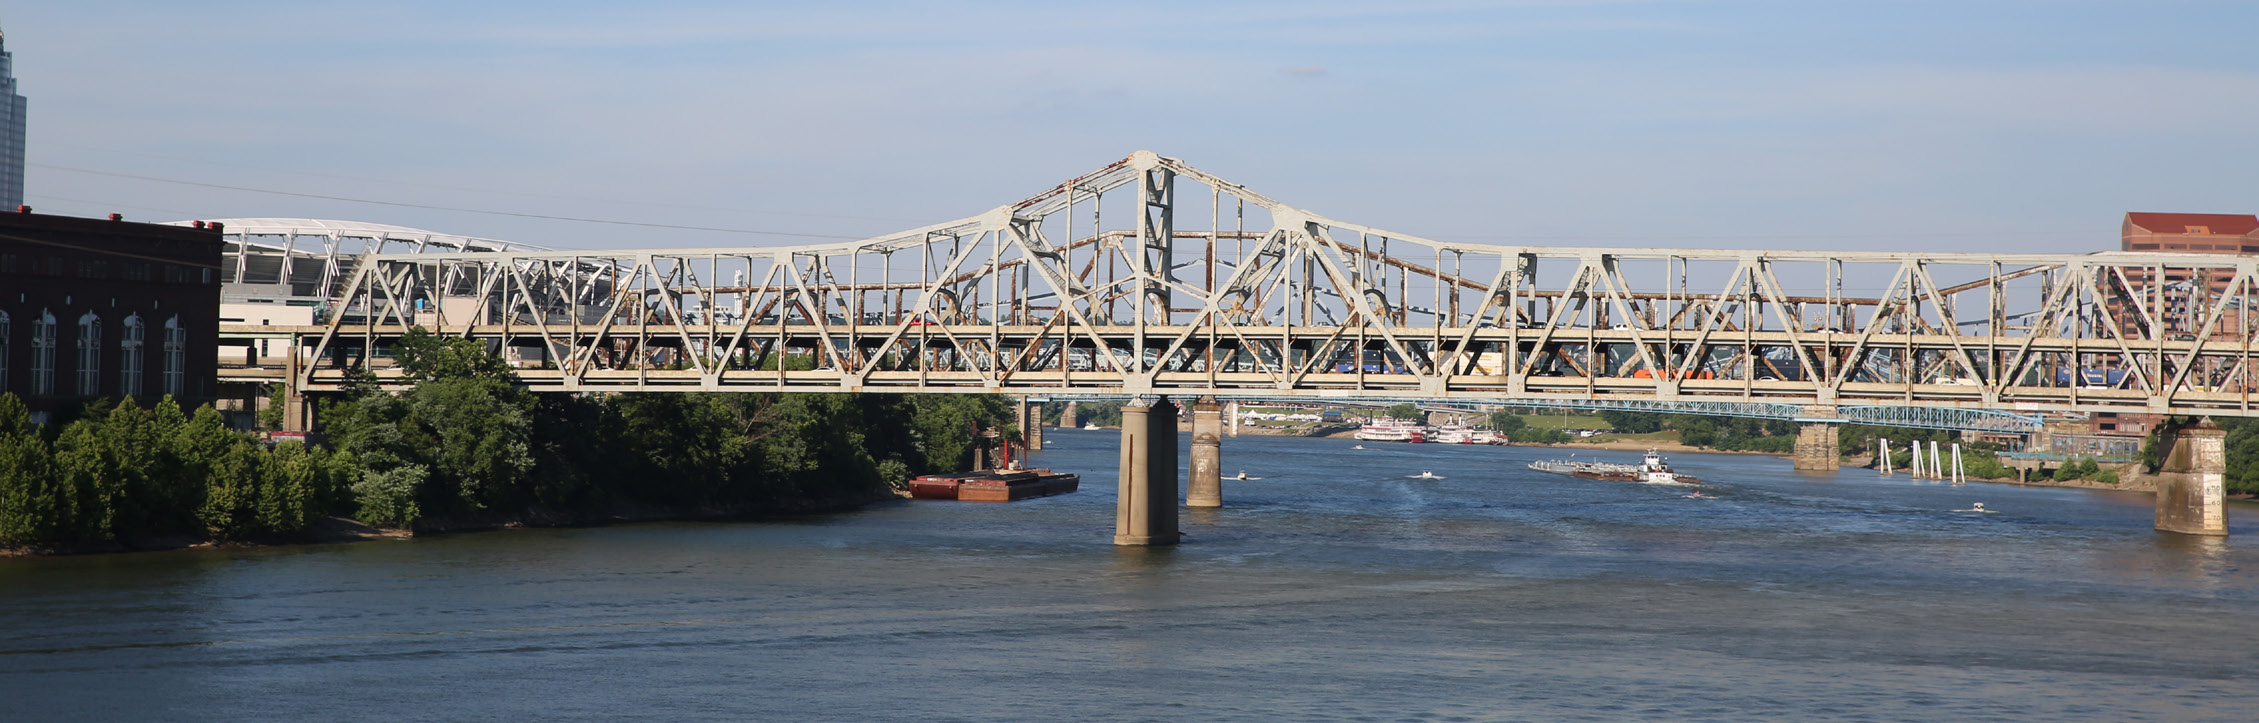 bridge over ohio river